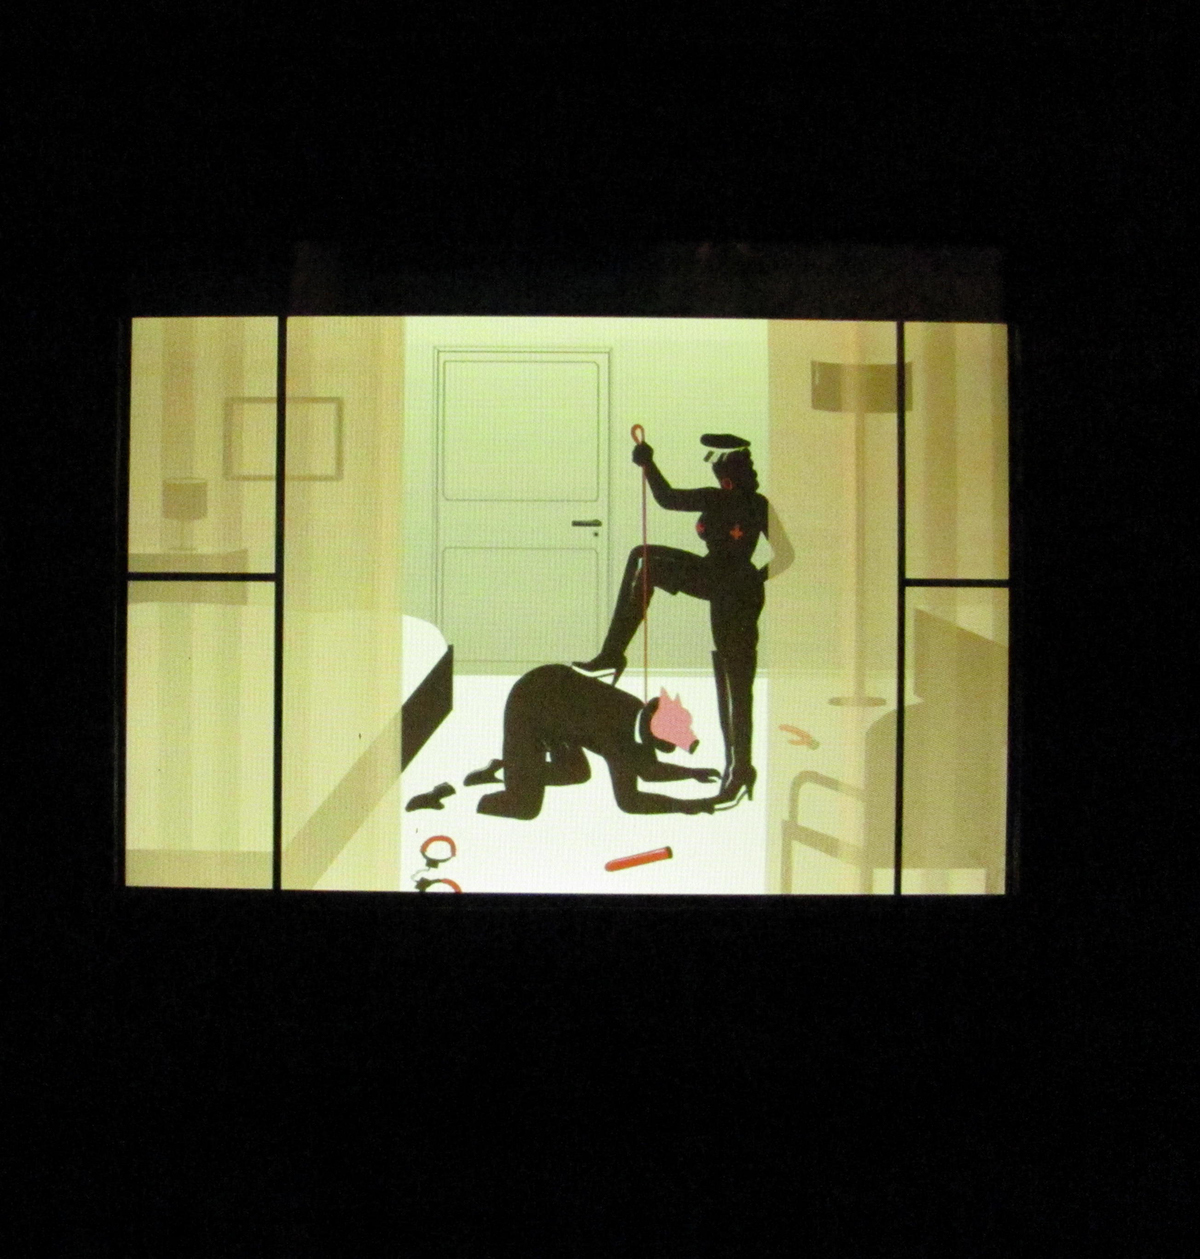 voyeurism couple bondage crime scene sister wunderkammern fine art hotel room screens Roma gallery italian artist peep show